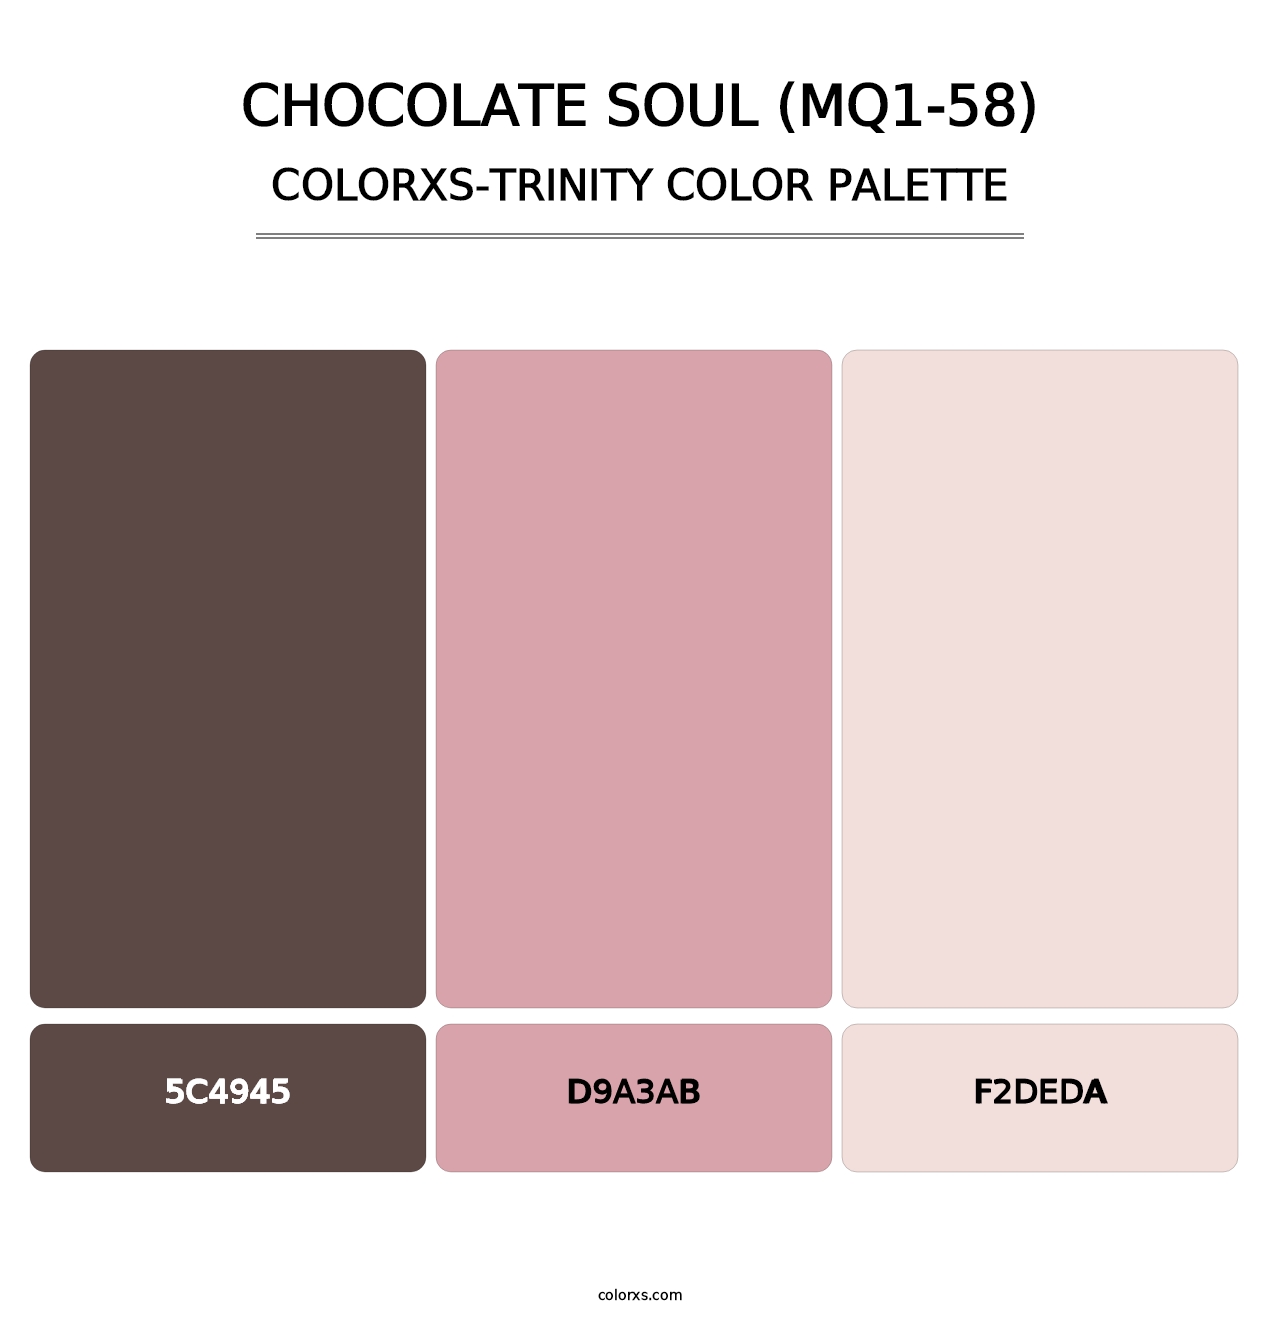 Chocolate Soul (MQ1-58) - Colorxs Trinity Palette